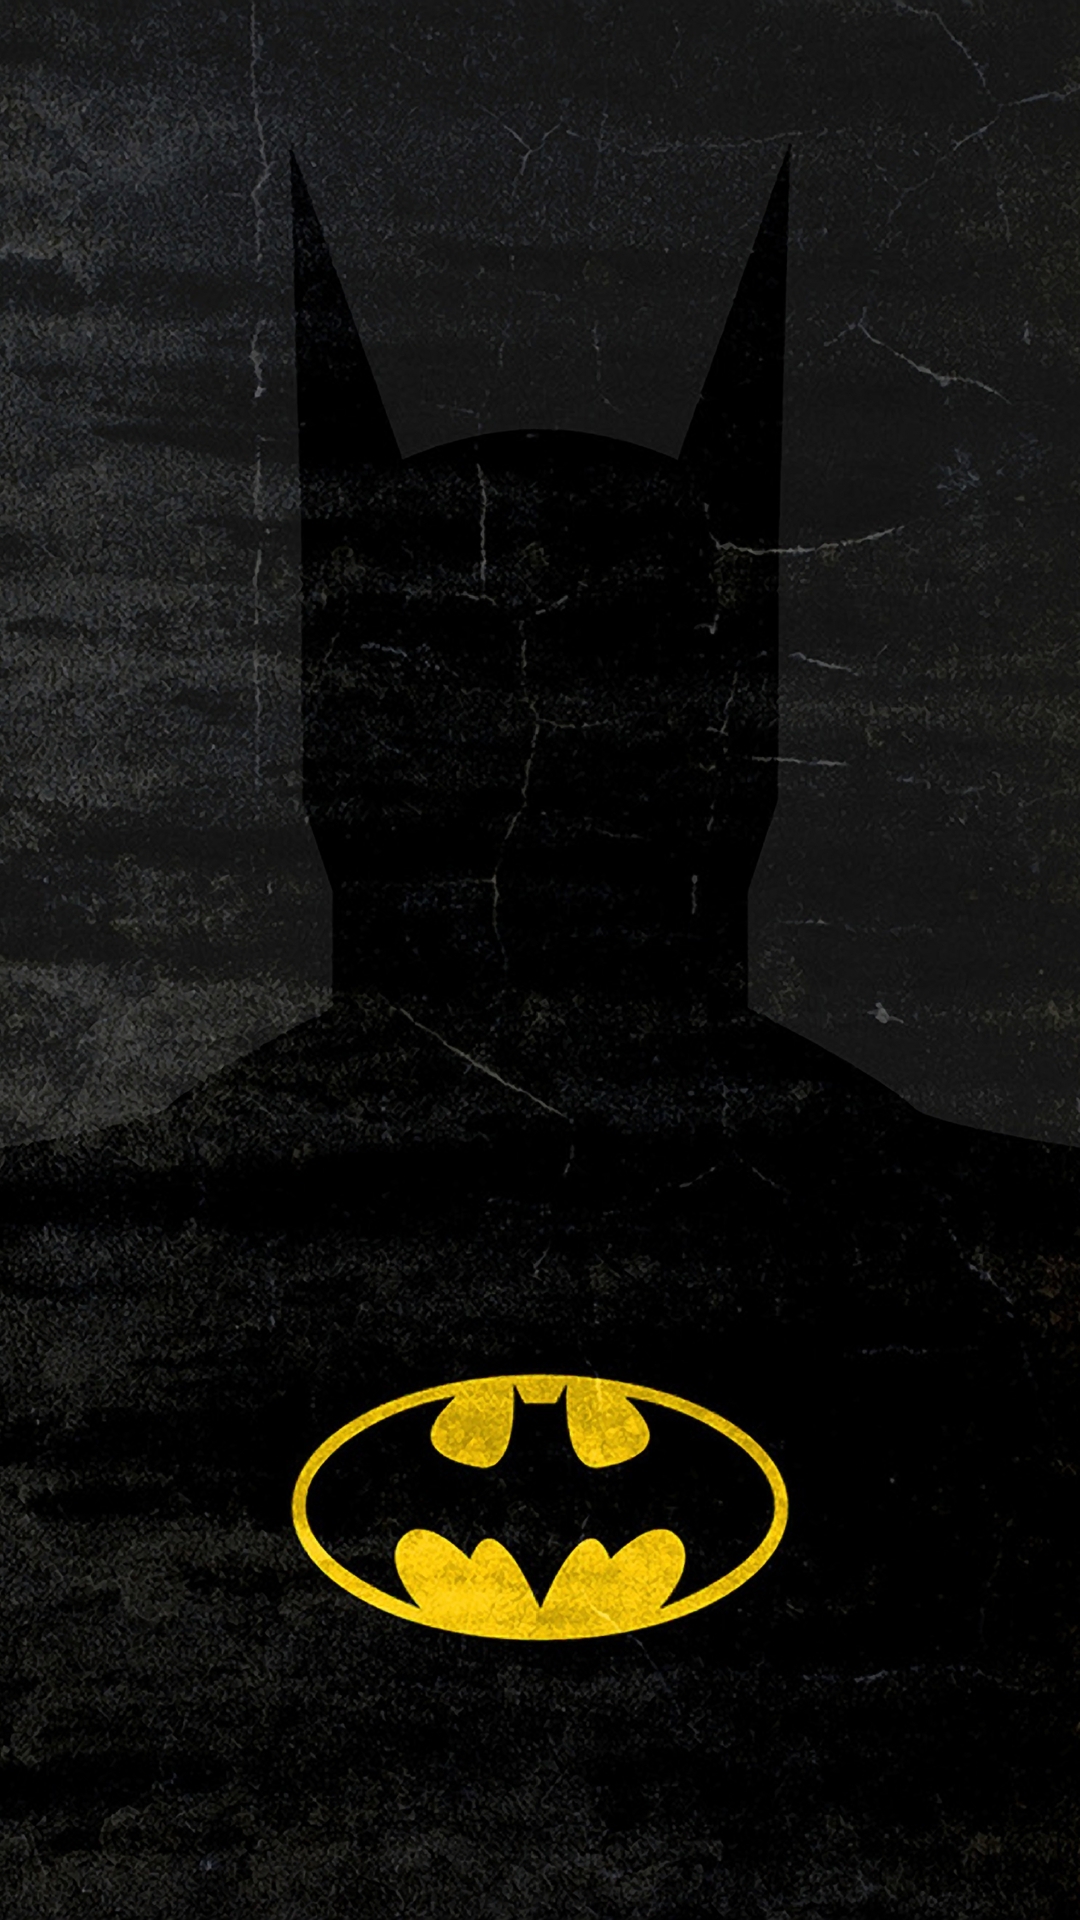 Batman For iPhone Wallpapers - Wallpaper Cave